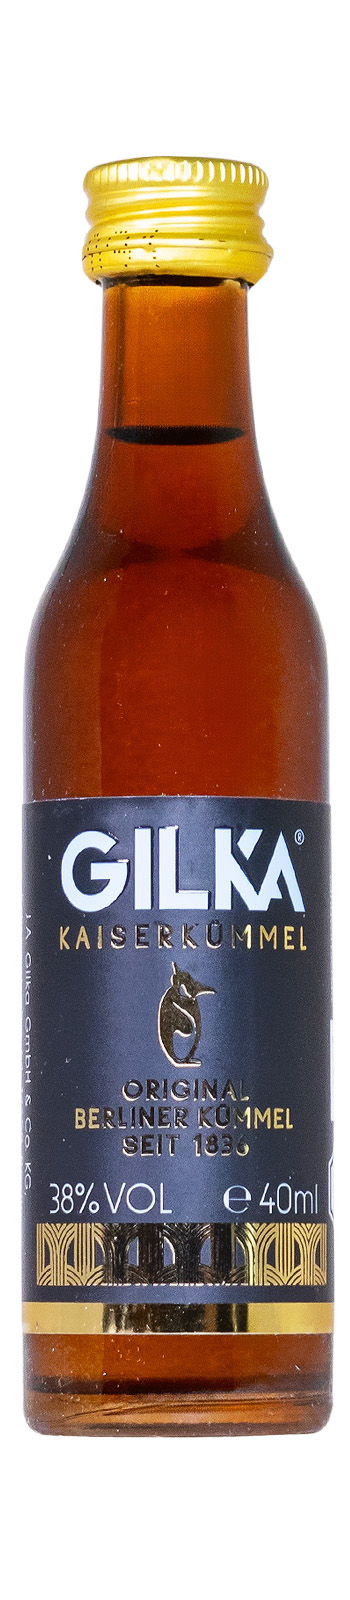 Gilka Kaiser Kümmel Miniatur - 0,04L 38% vol